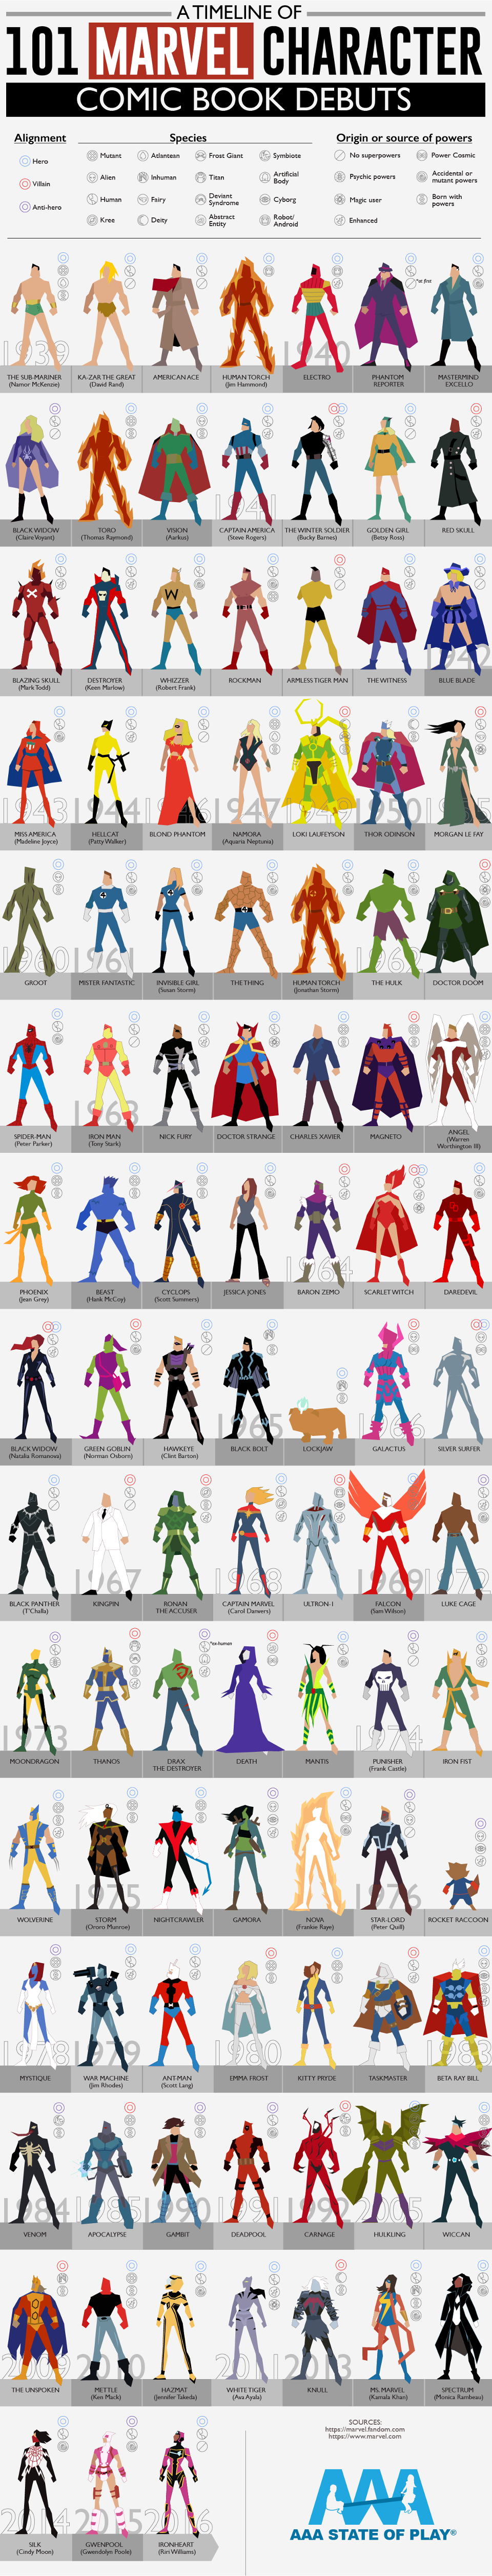 marvel heroes list characters